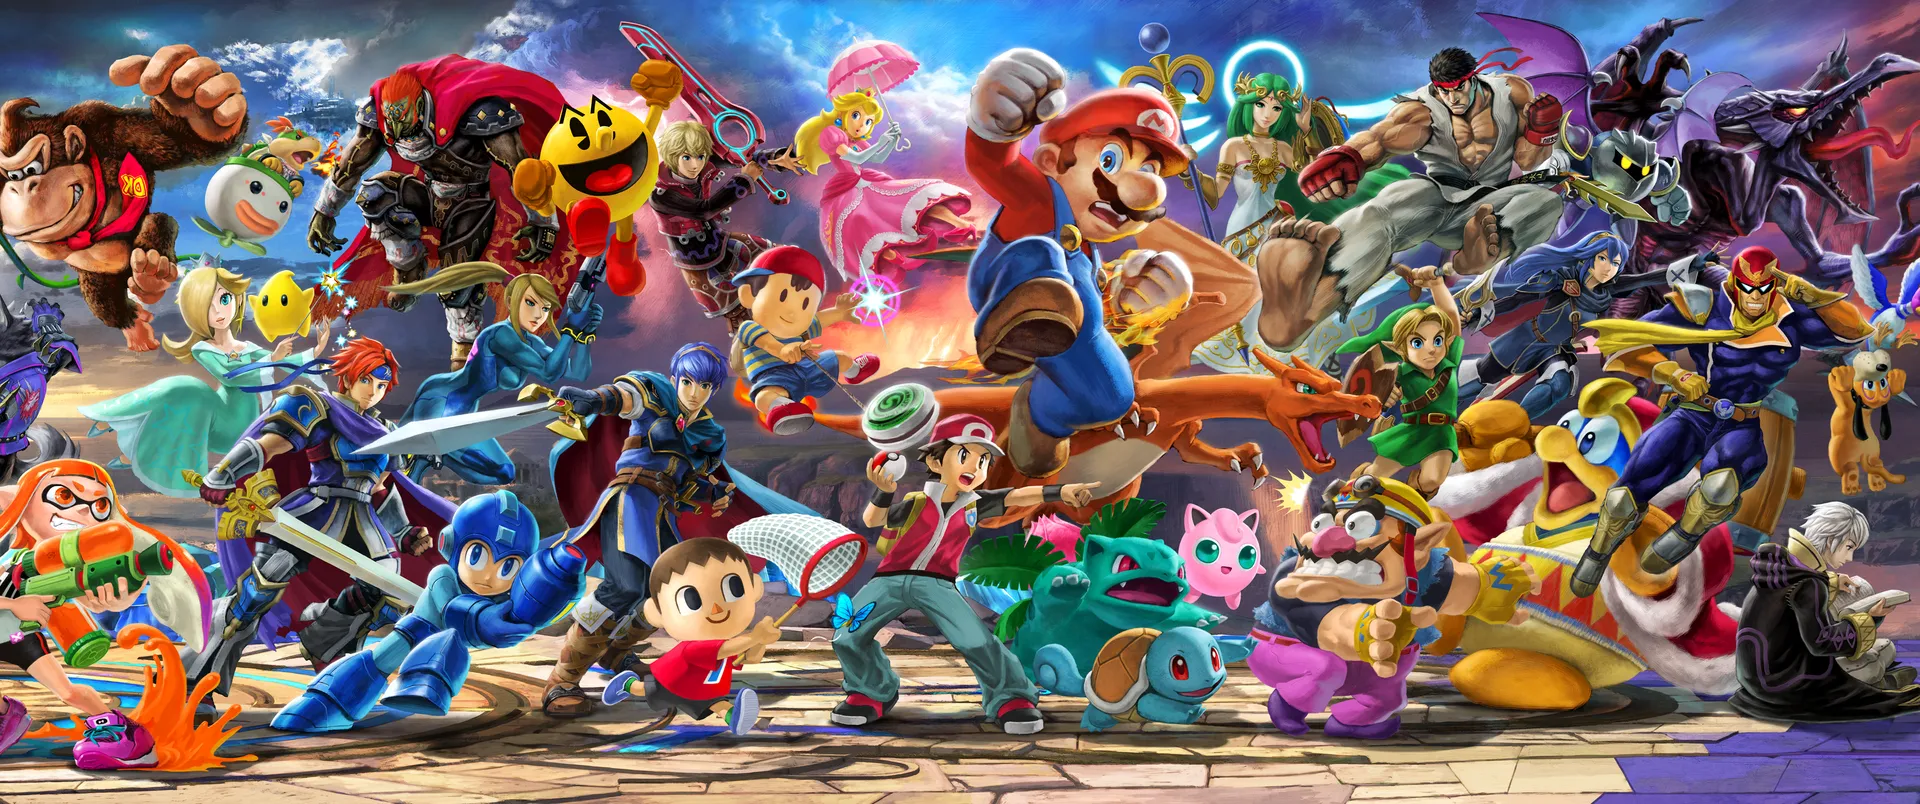 Smash Bros Ultimate Backgrounds